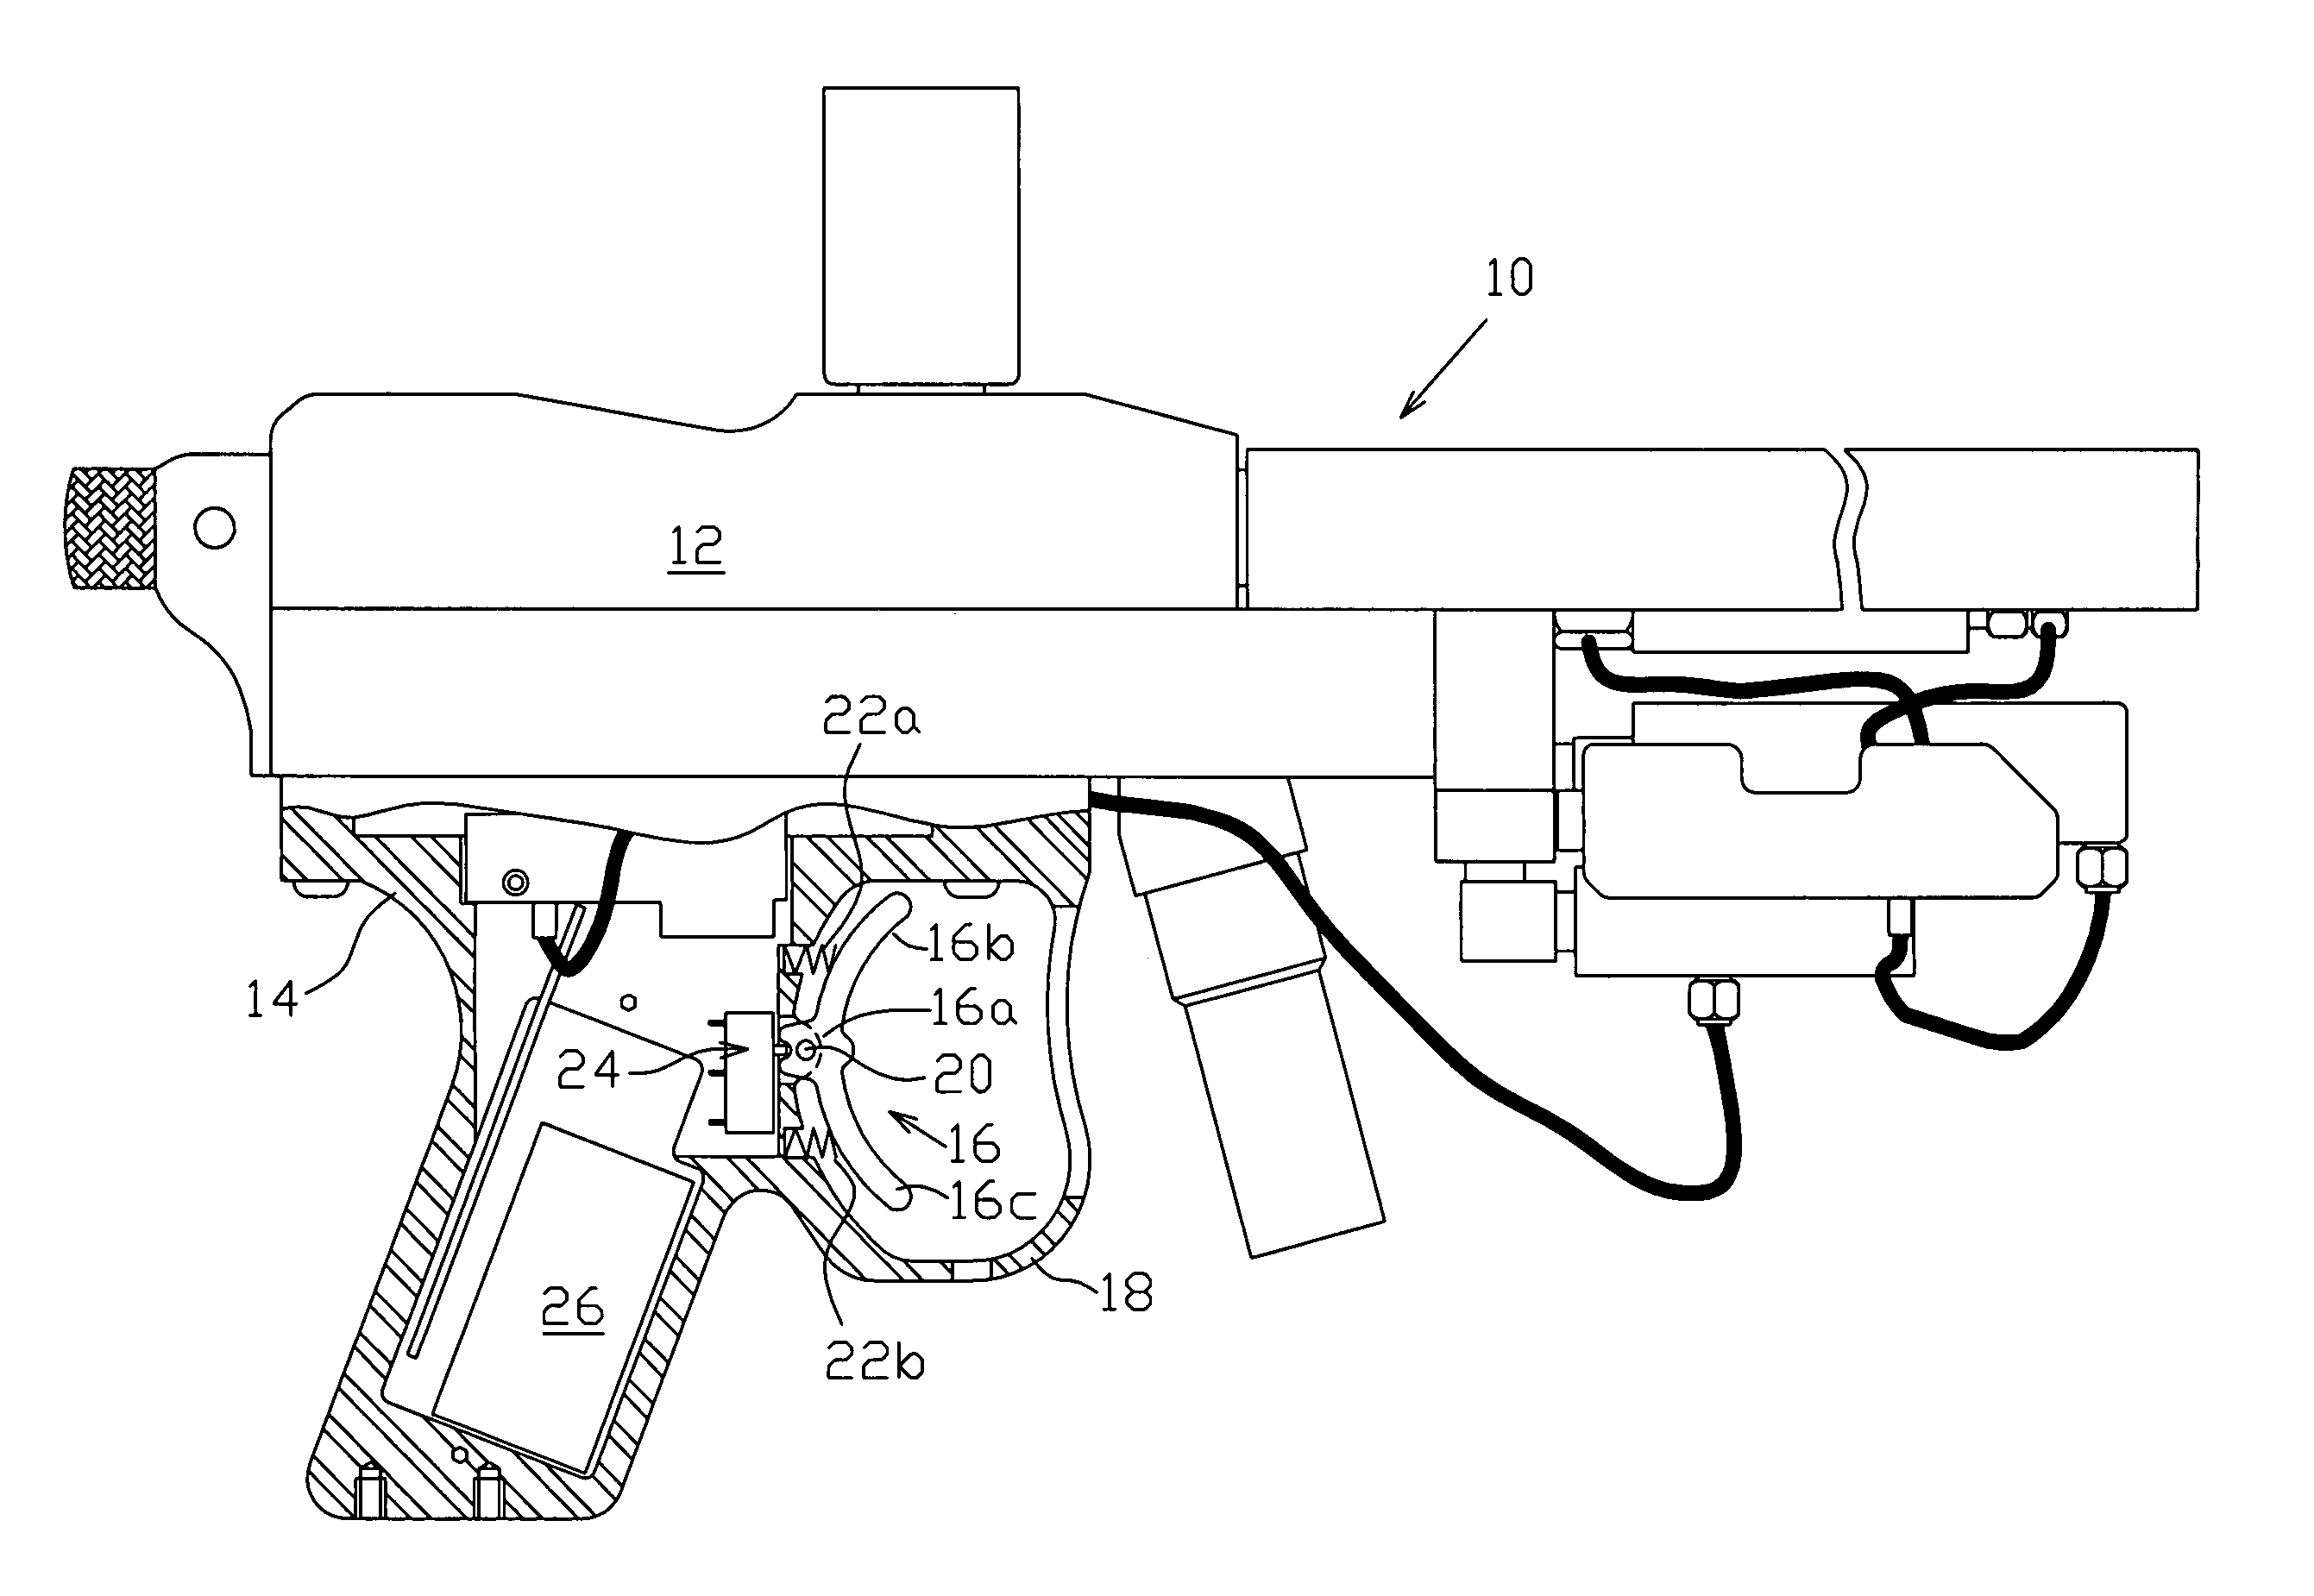 Paintball gun and method